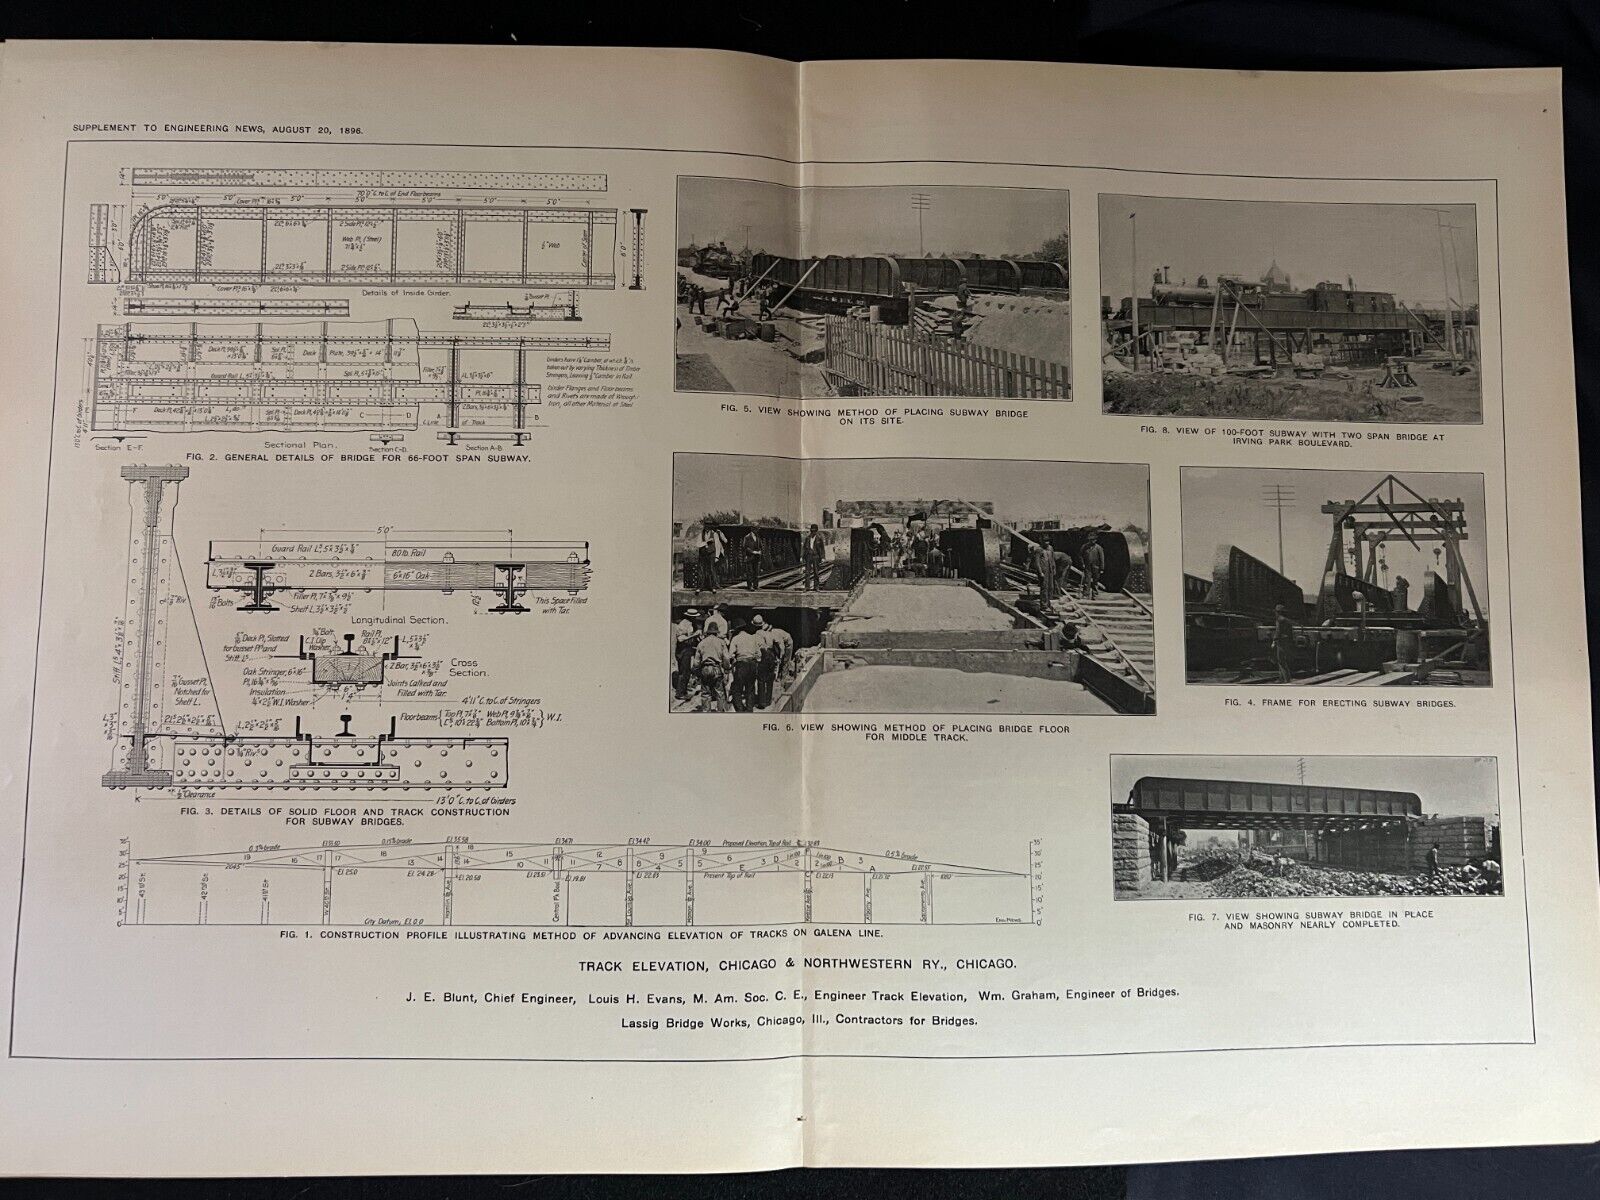 1896 Industrial Illustration/Drawing Track Elevation Chicago & Northwestern RY.